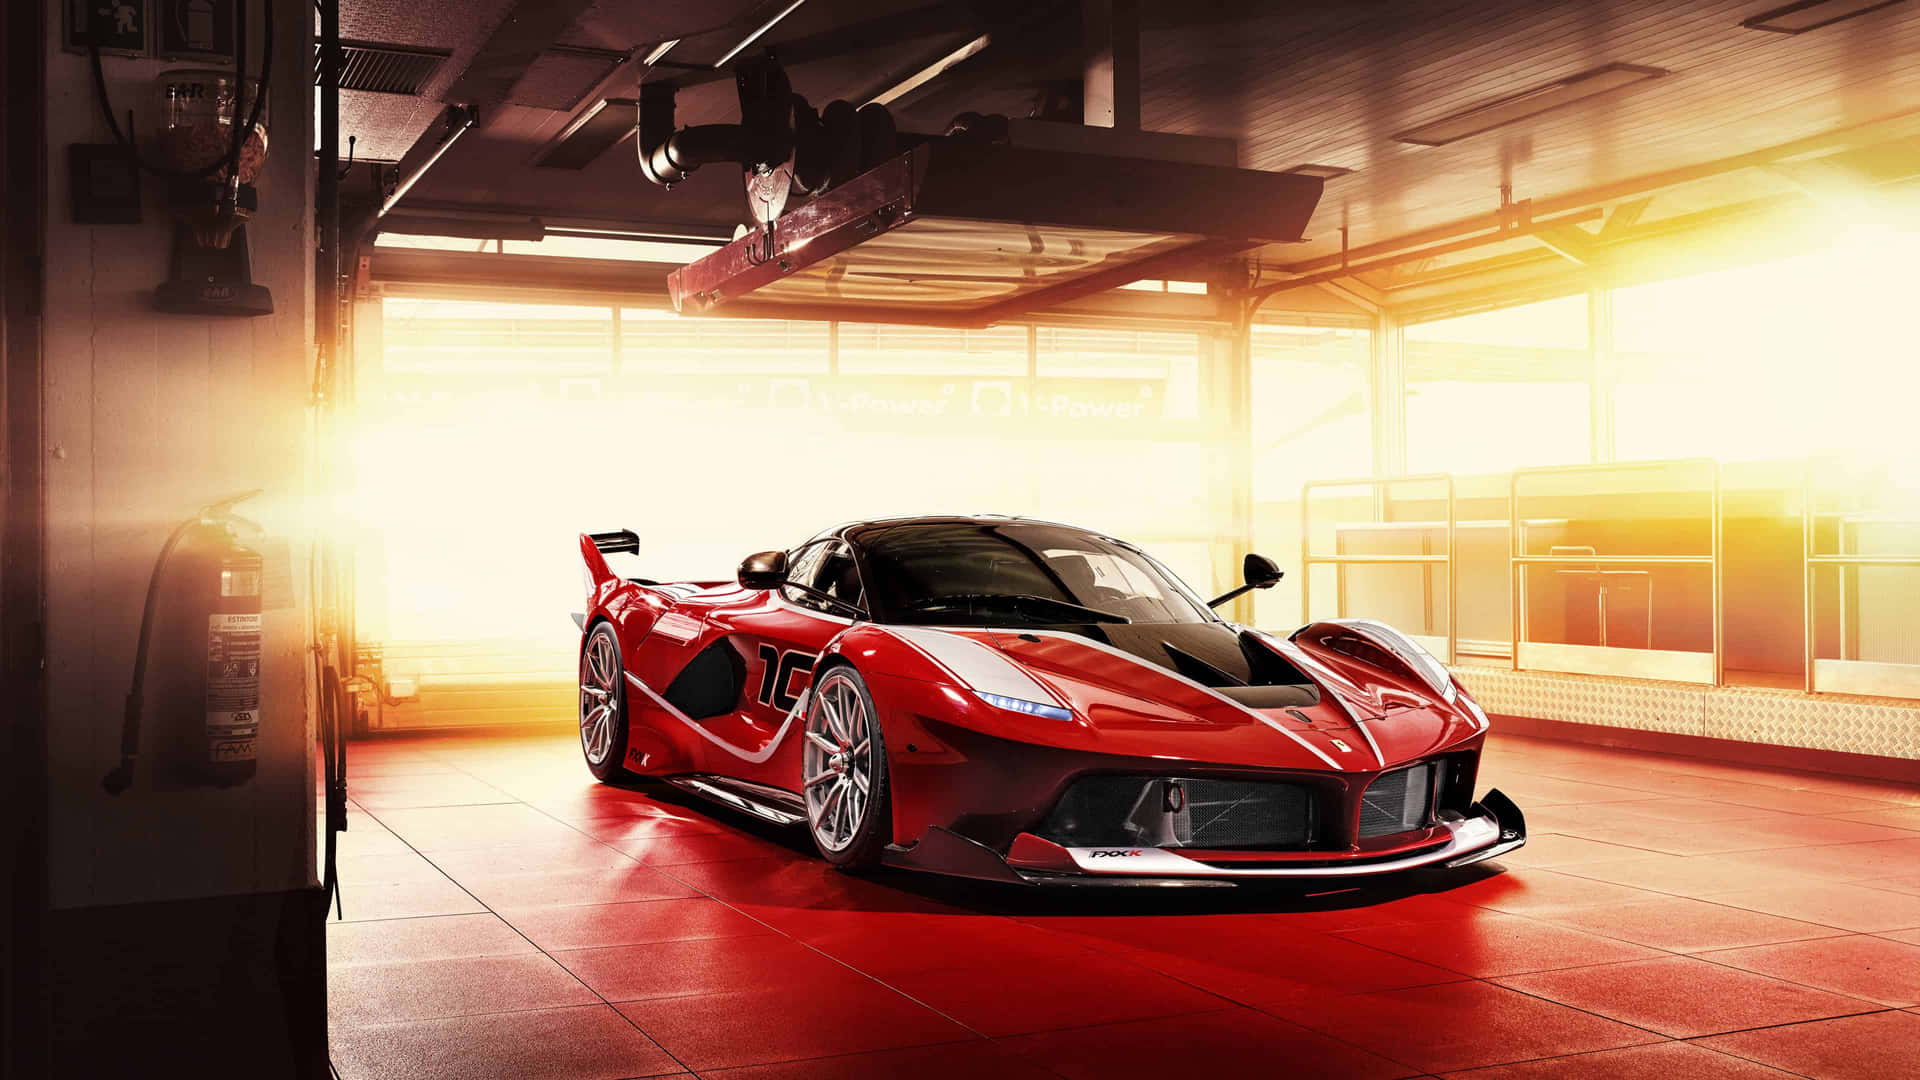 The Luxury of a 4k Ferrari